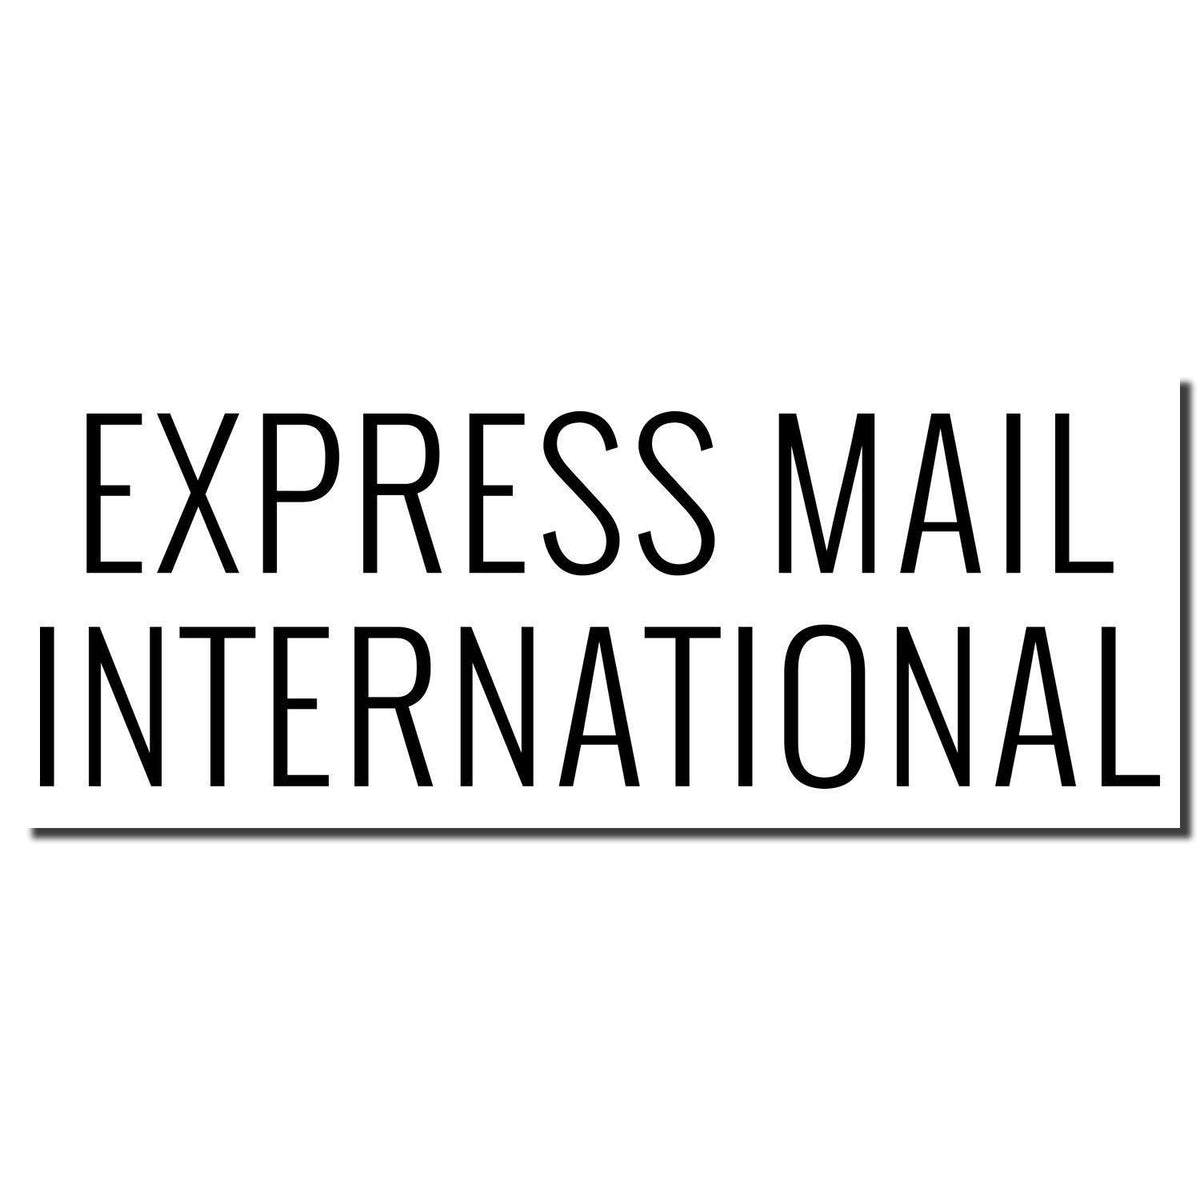 Enlarged Imprint Large Express Mail International Rubber Stamp Sample